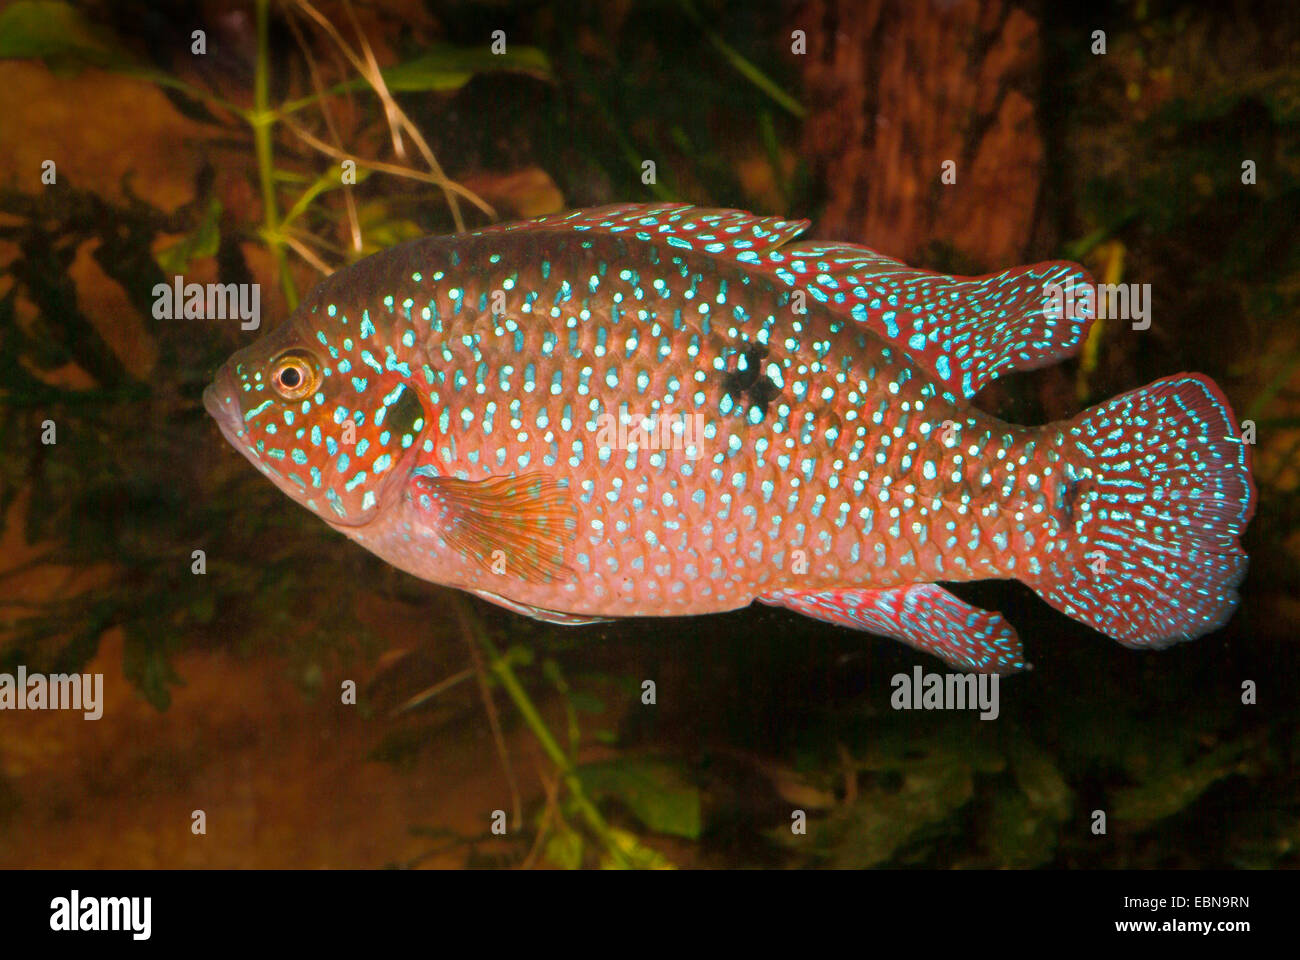 Jewel fish, Jewelfish, Red jewel fish, Red cichlid, Banded Jewel fish (Hemichromis bimaculatus, Hemichromis guttatus), swimming Stock Photo